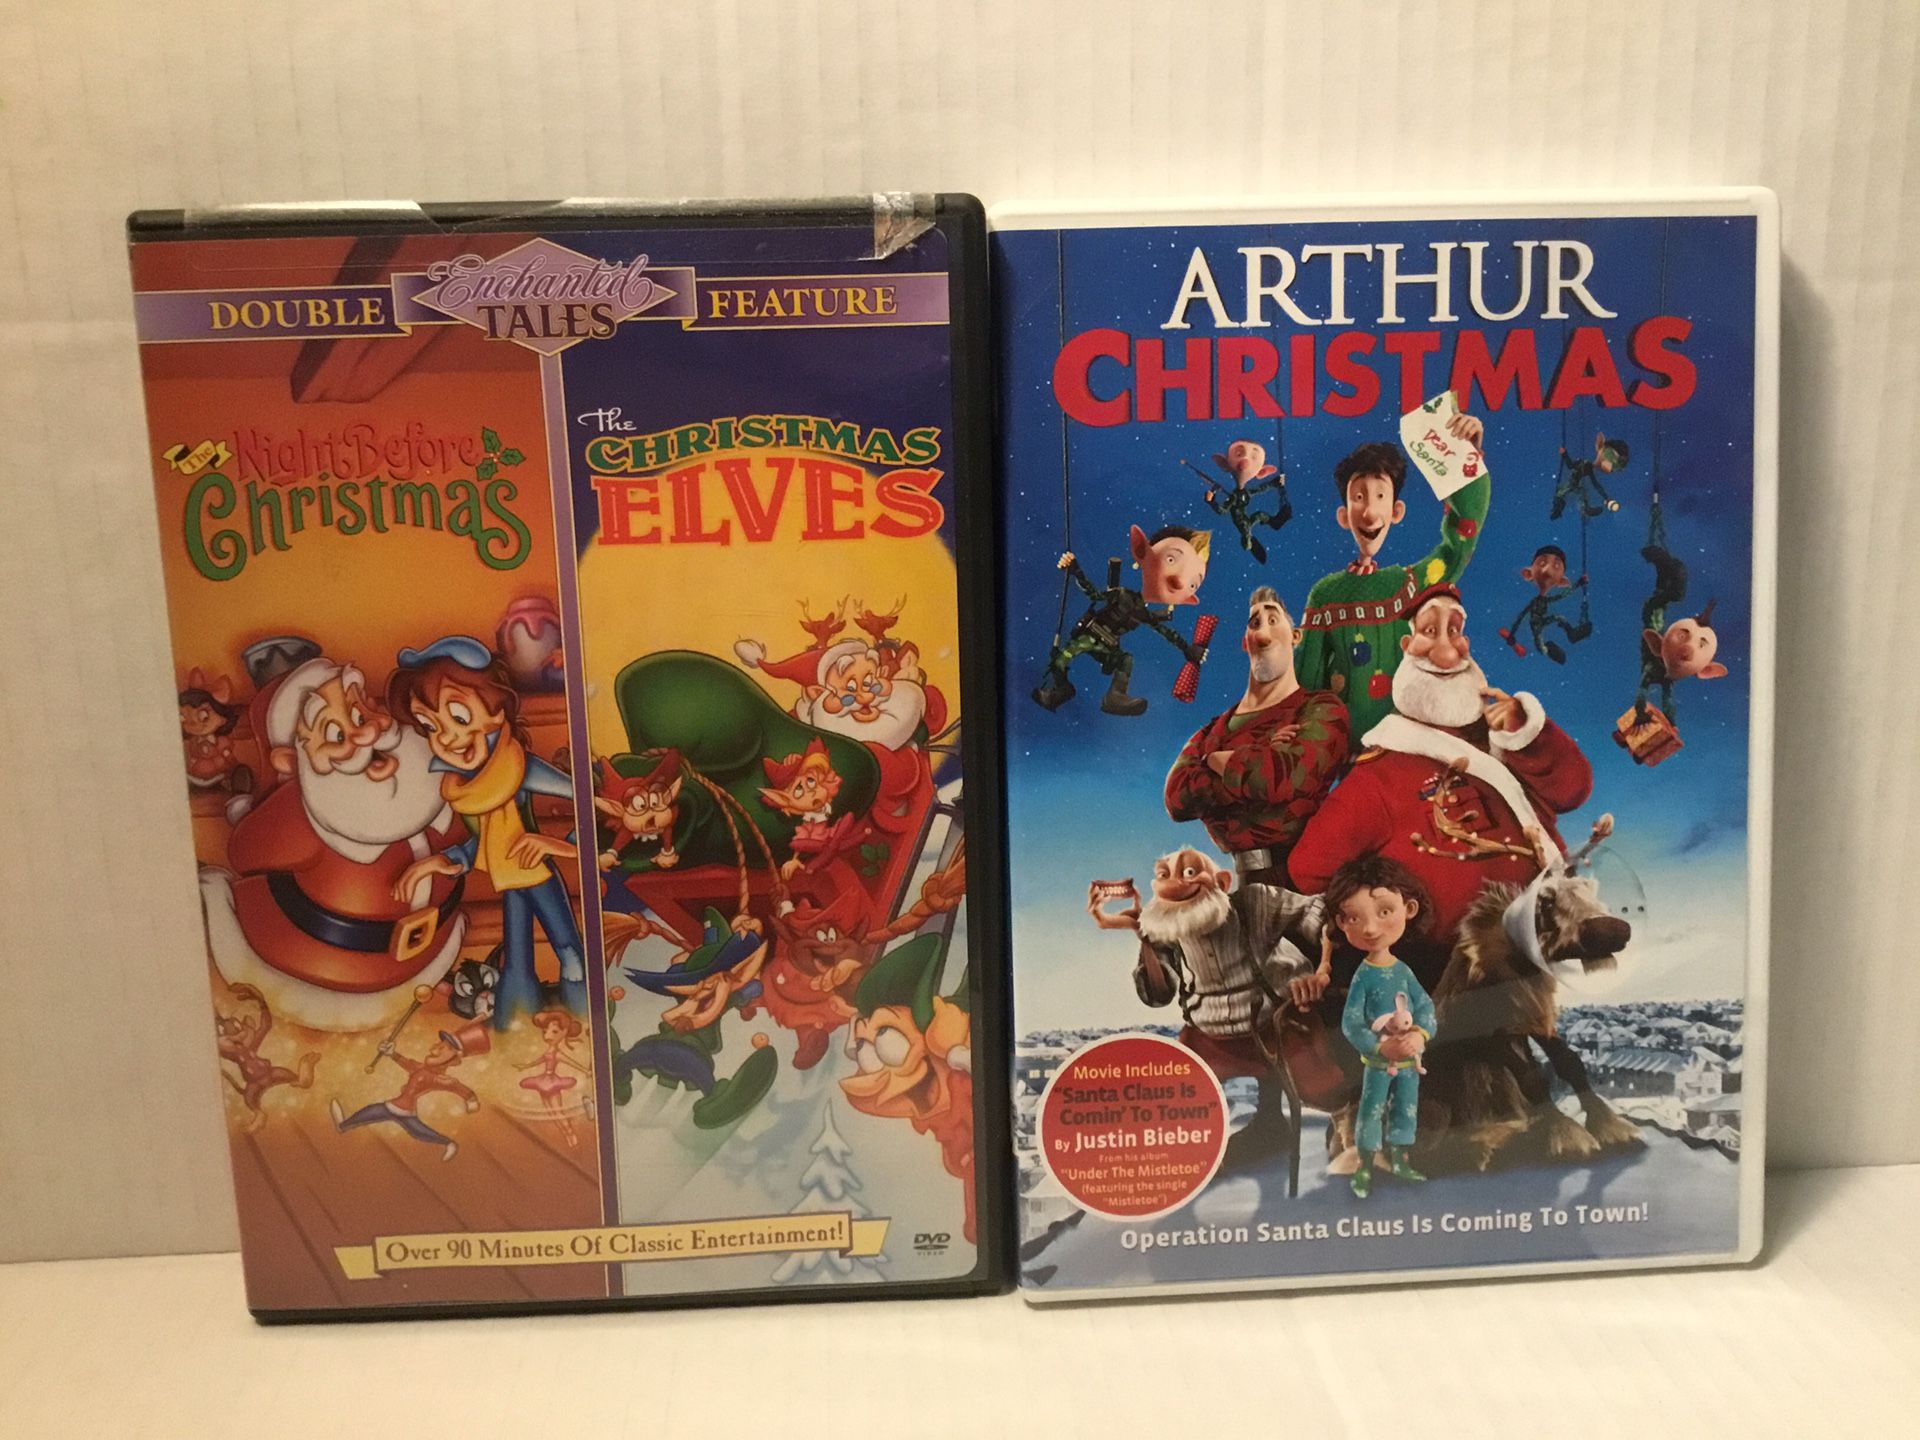 Christmas videos on DVD for kids